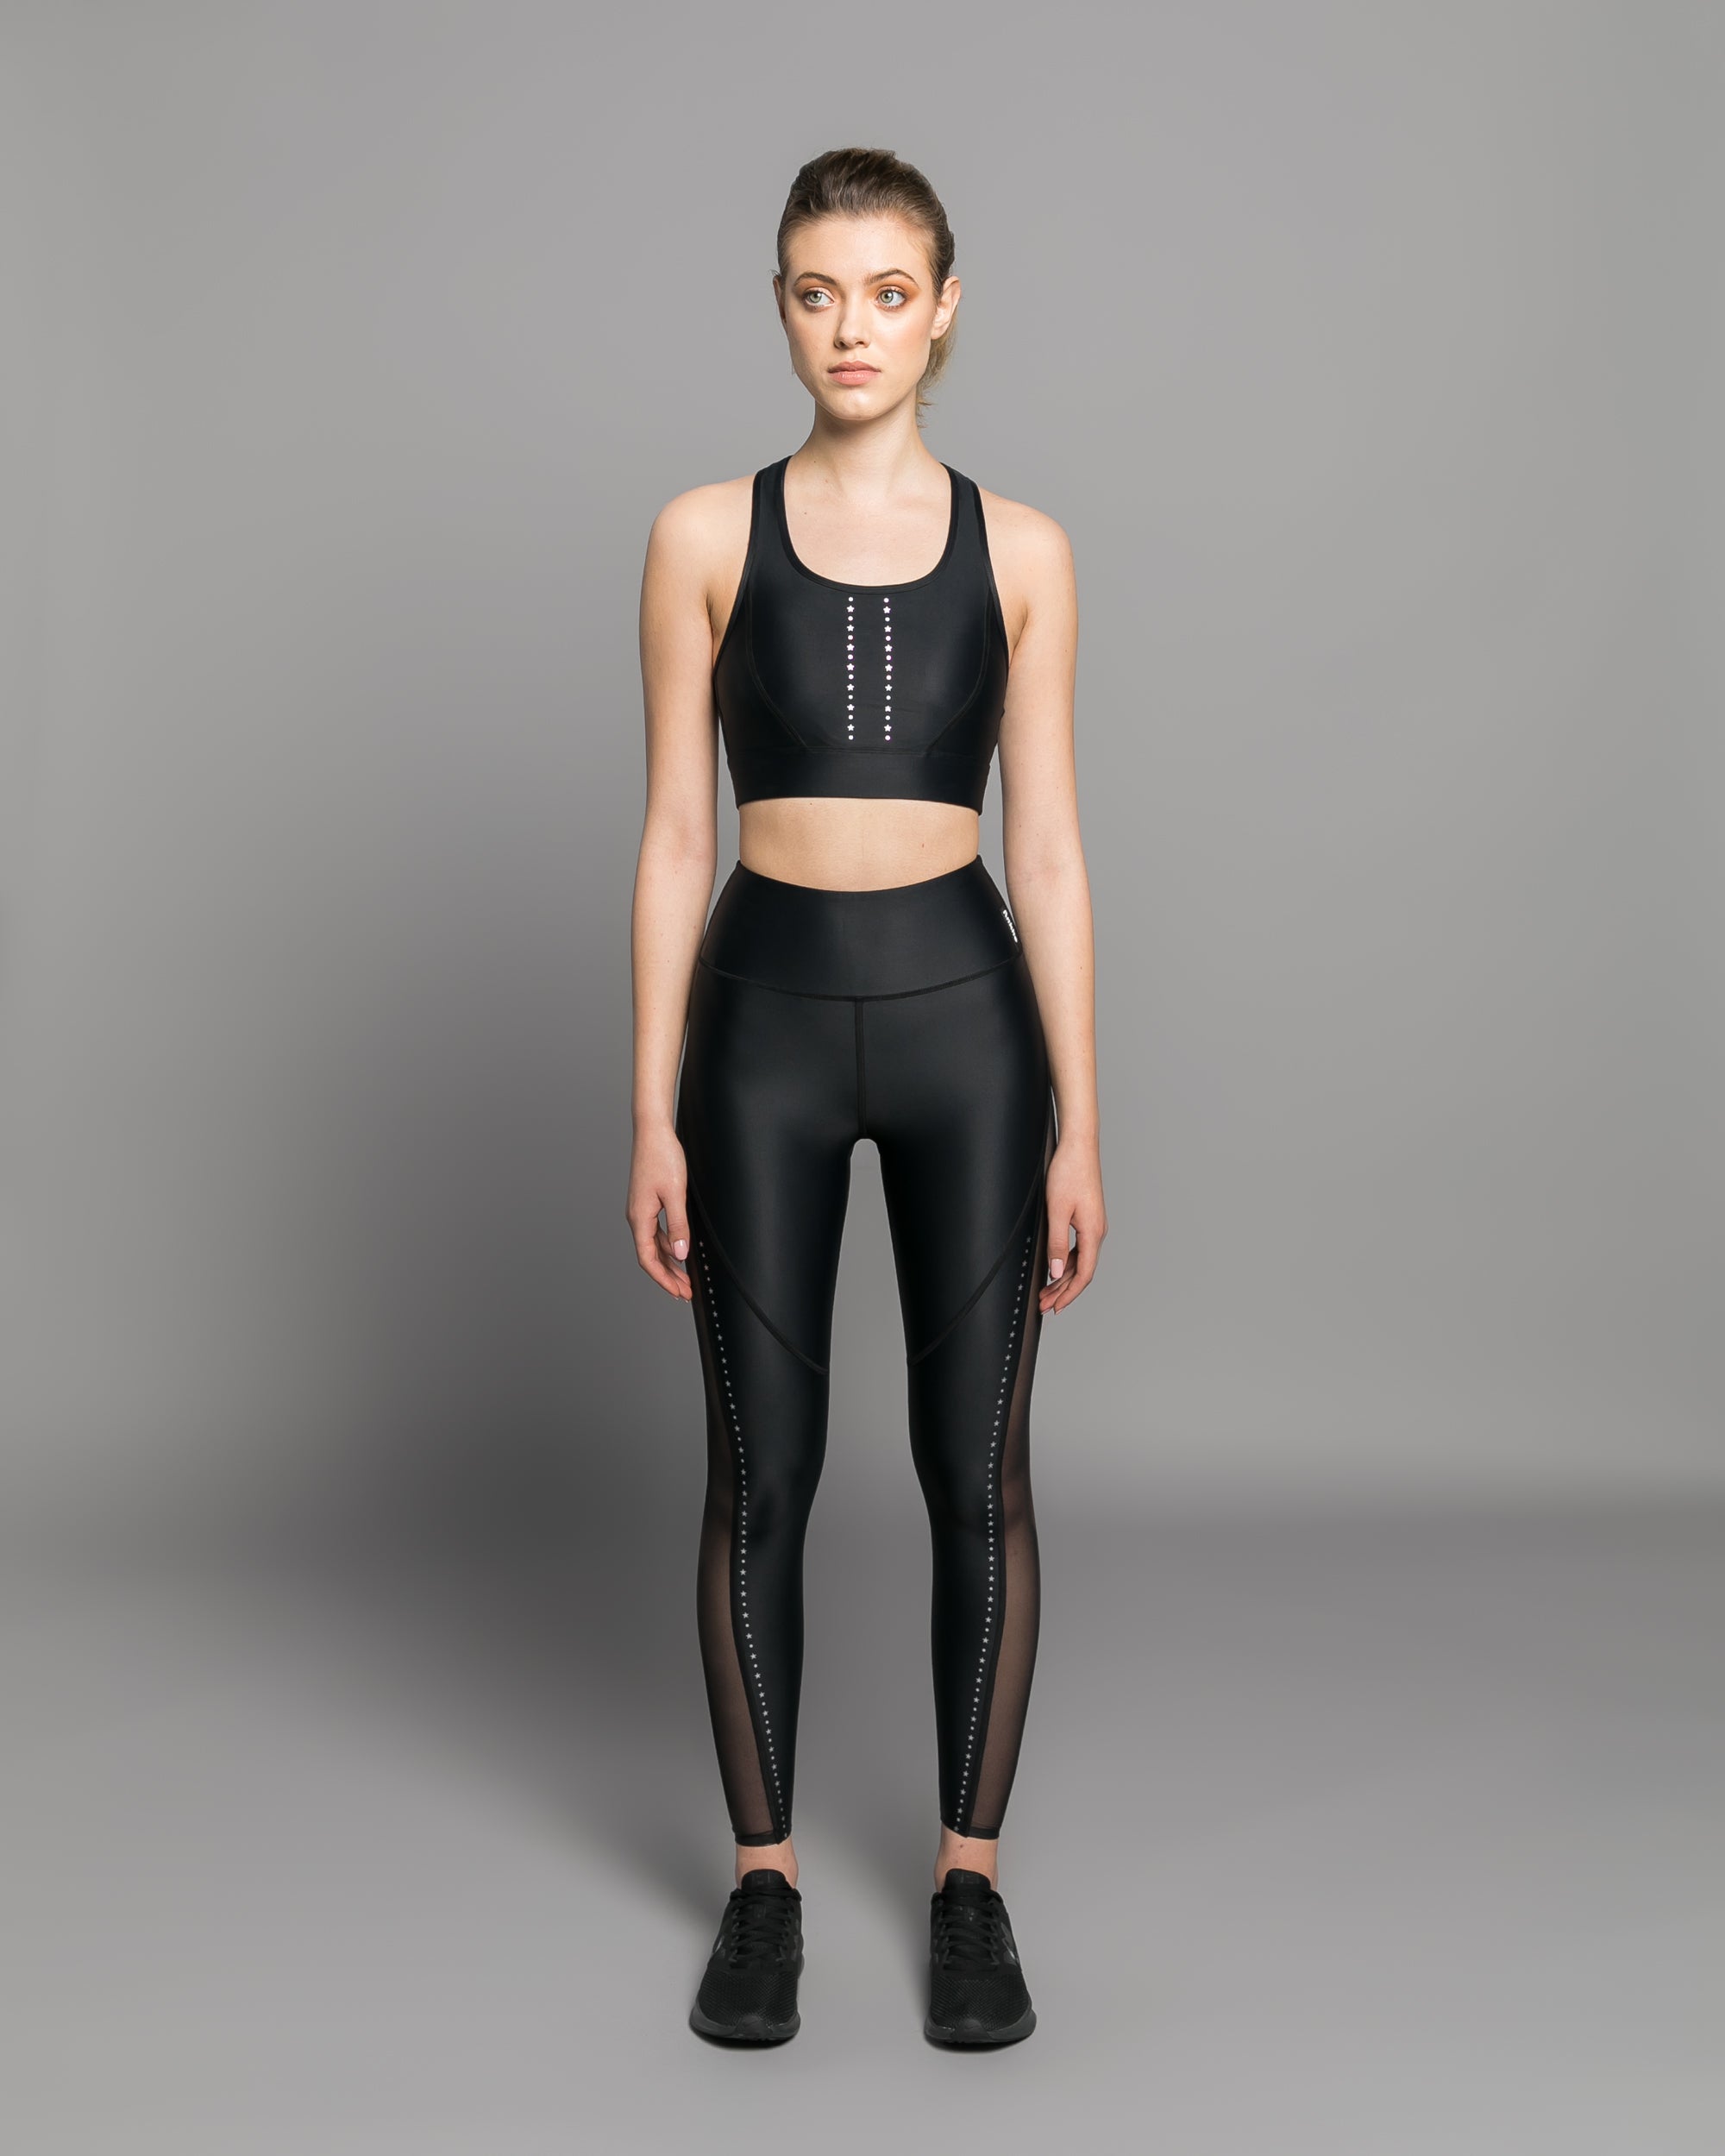 Mesh leggings and bra made of Econyl® regenerated nylon